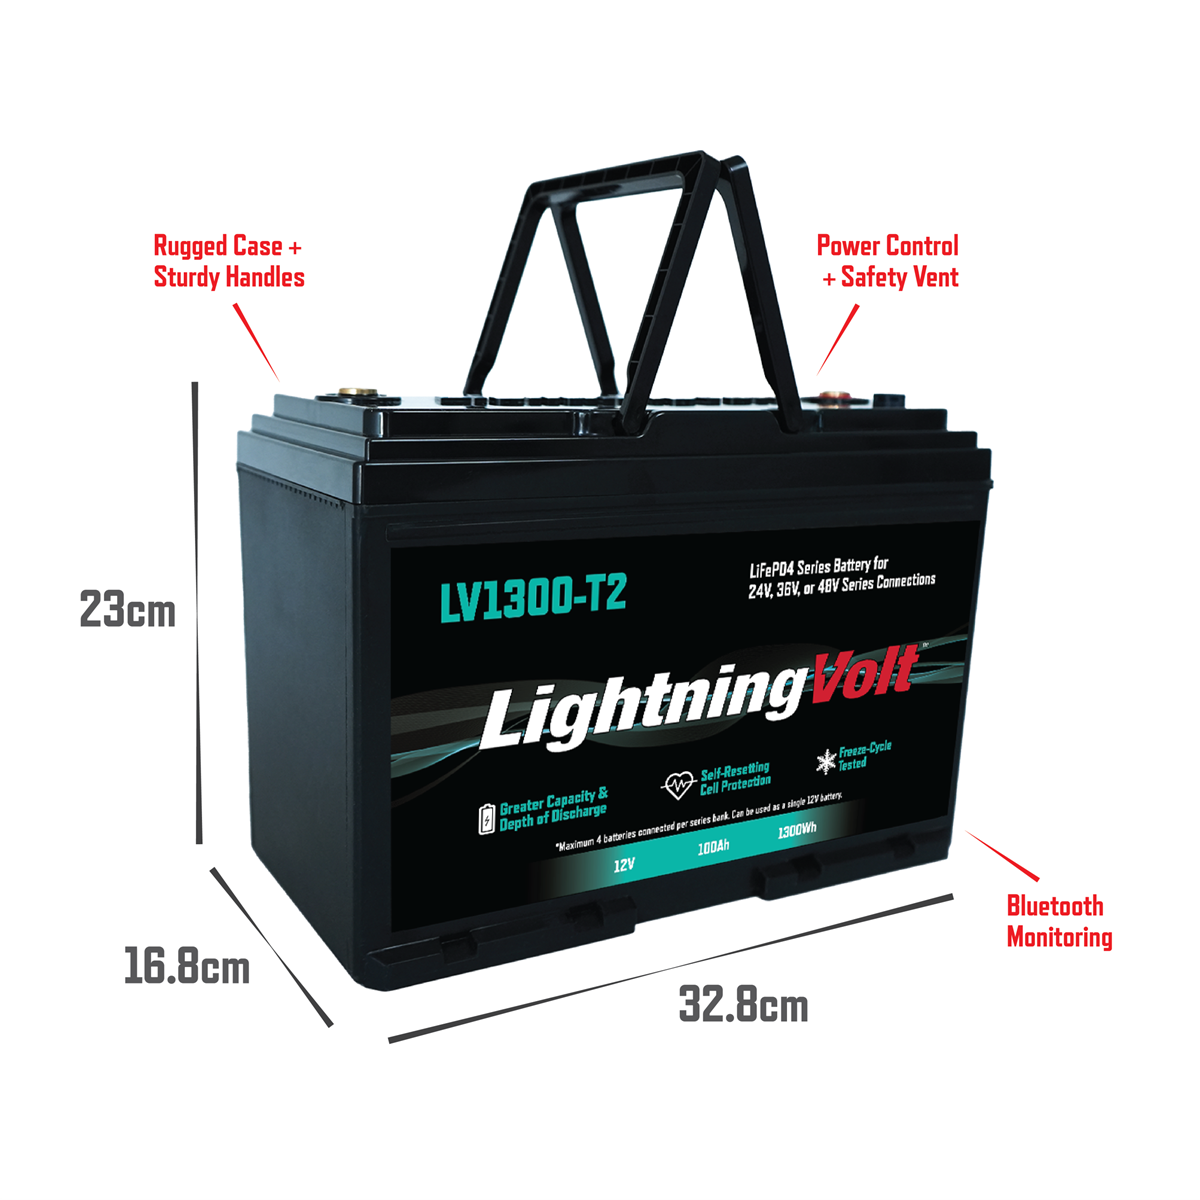 Trolling Motor Lithium Battery LFP - LightningVolt